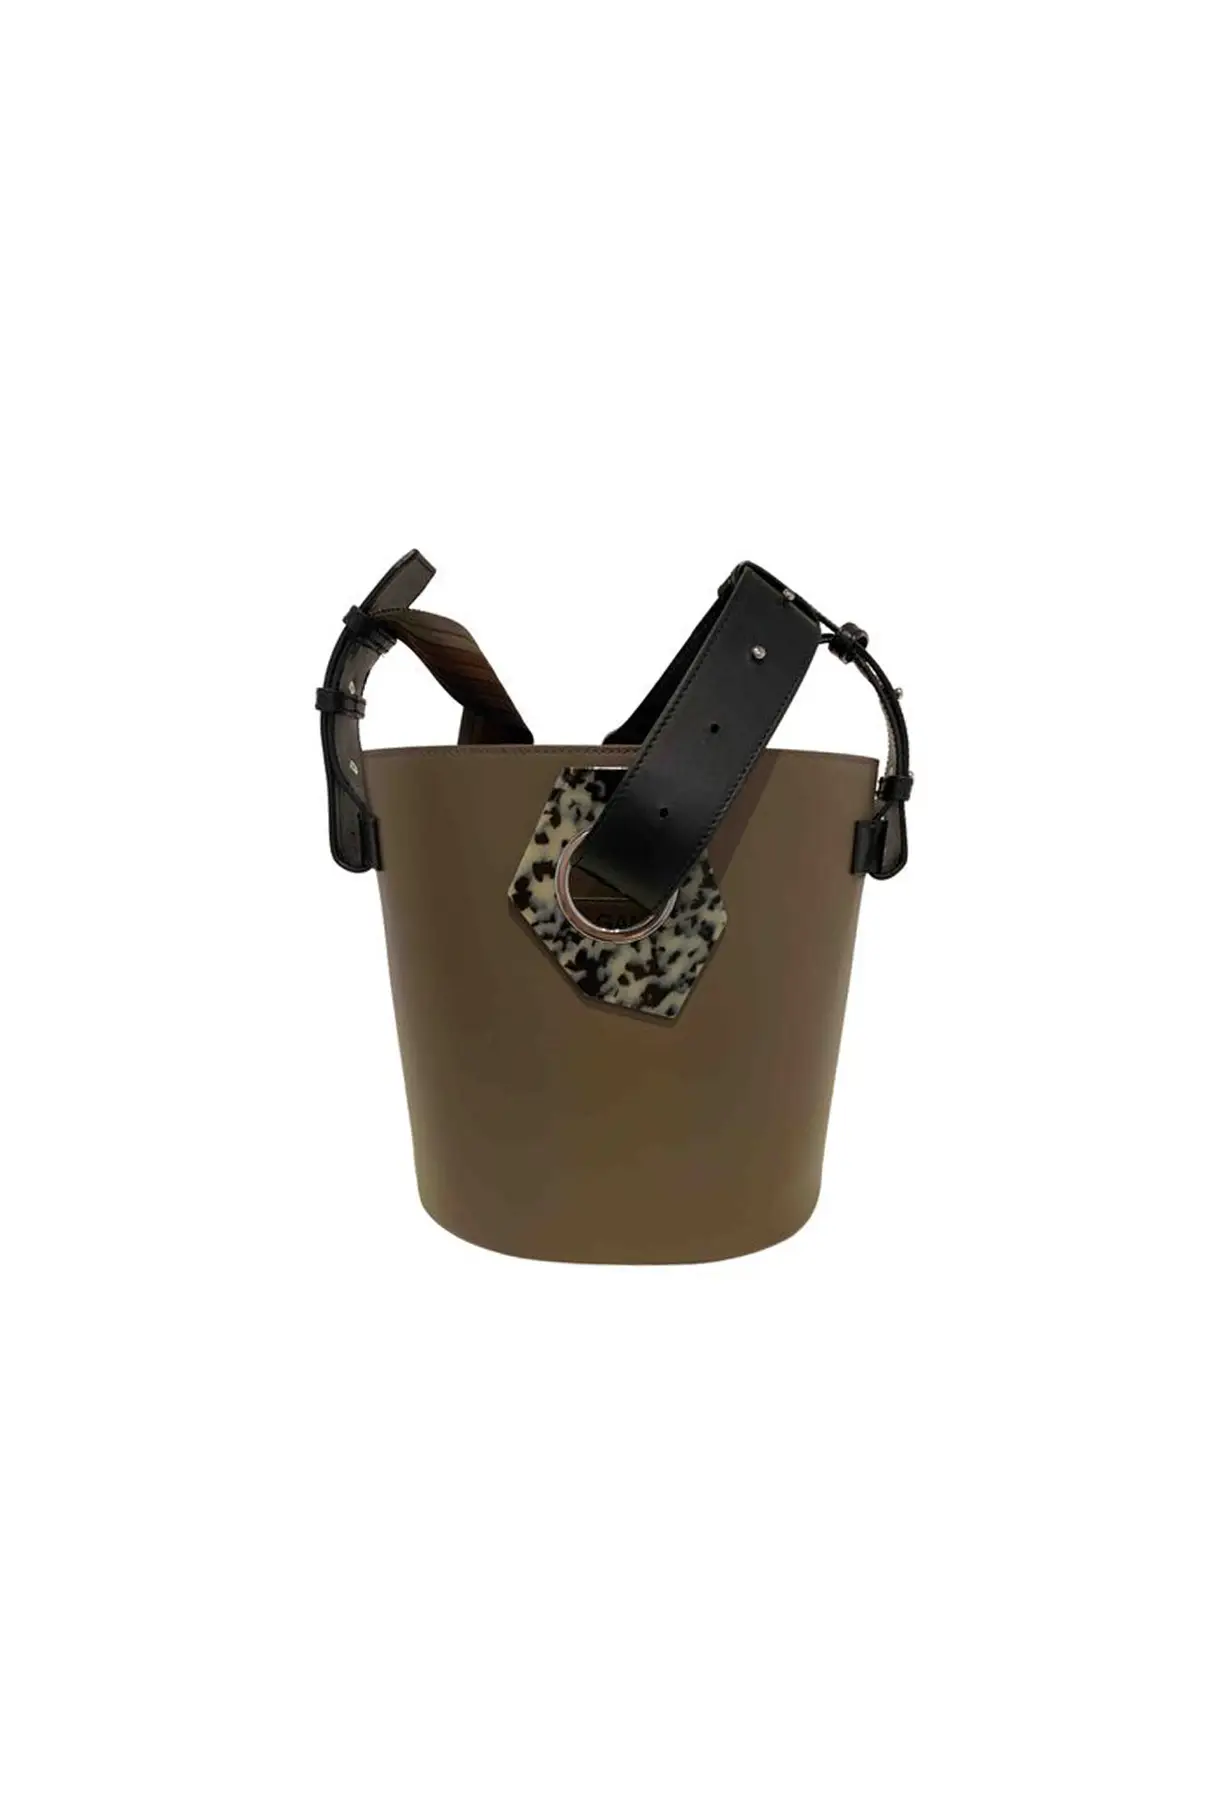 brown-leather-hand-bag-ganni-bucket-bag.jpg